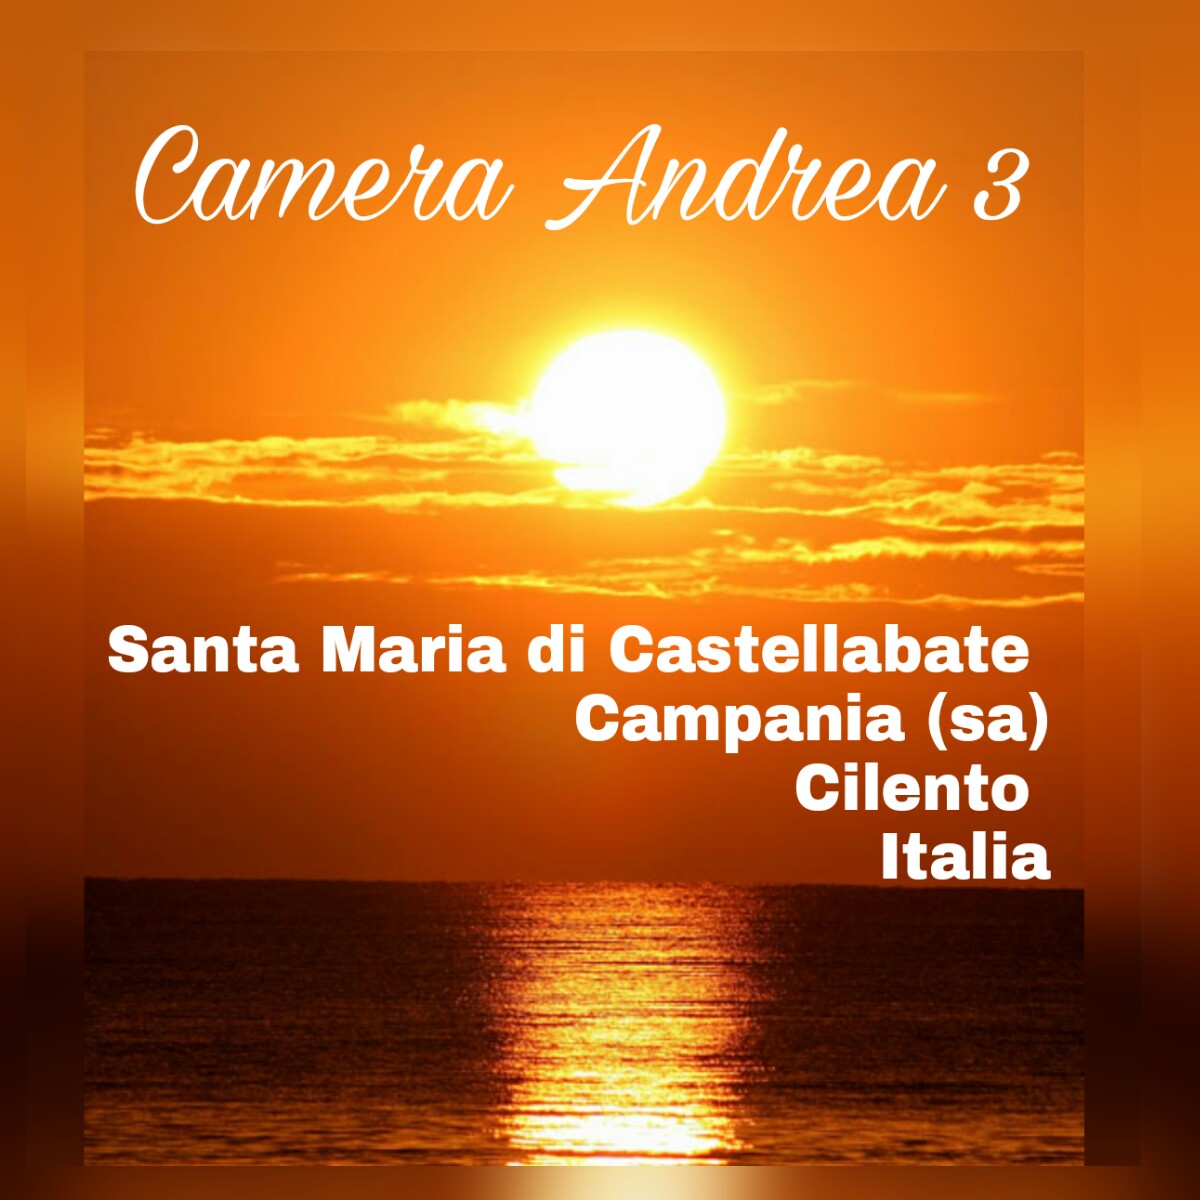 Camera Andrea 3 